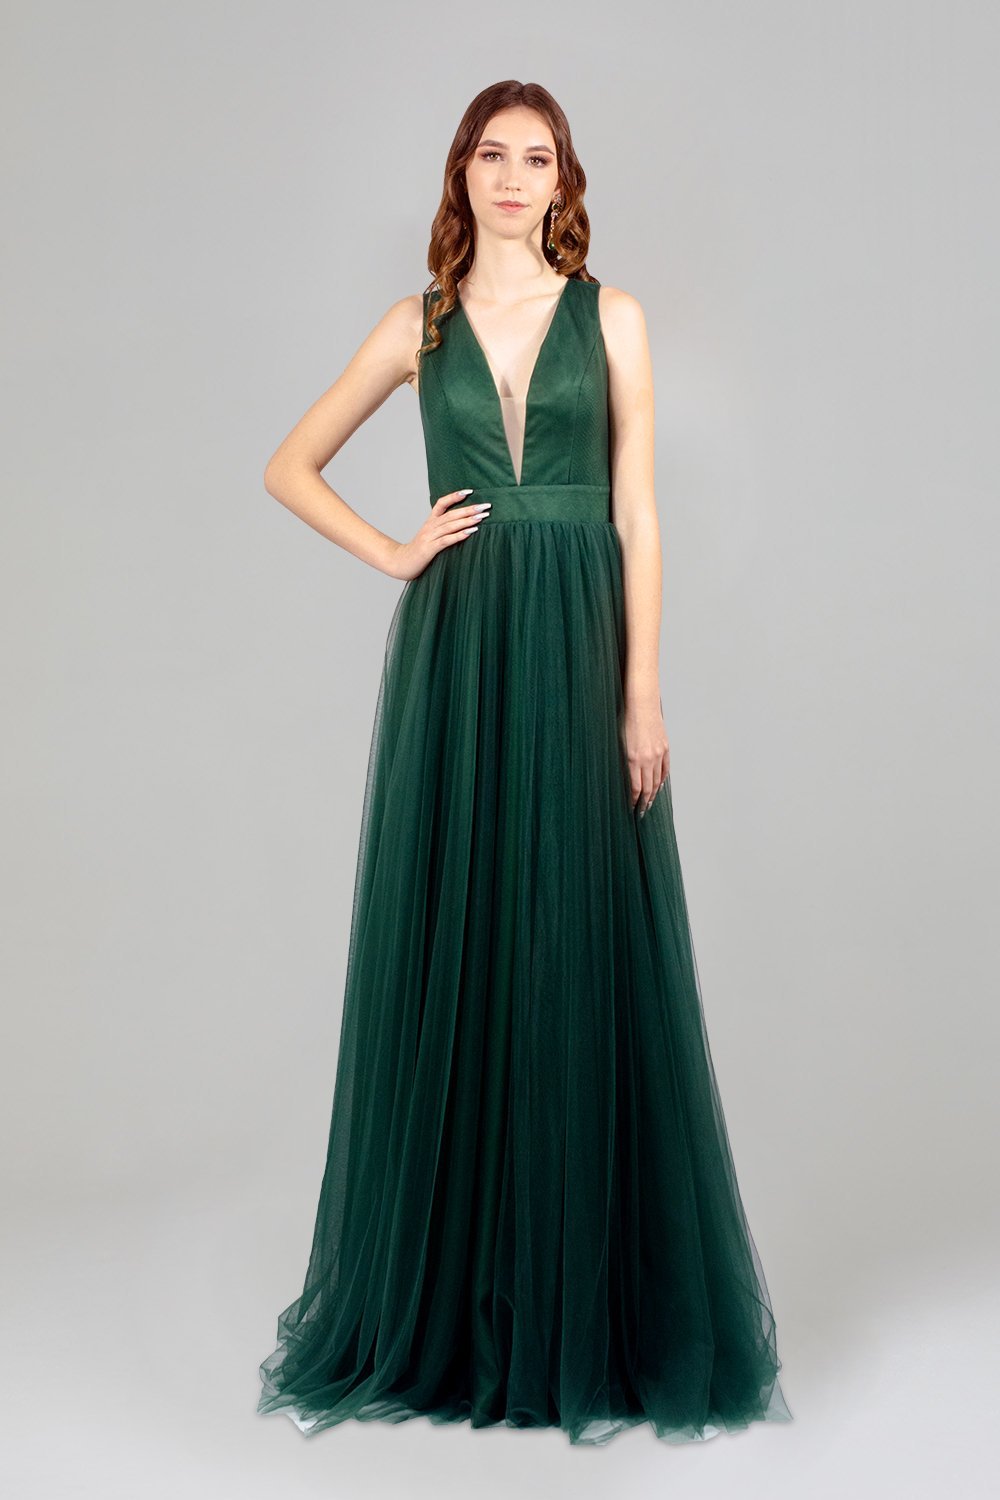 custom made green tulle bridesmaid dresses perth australia envious bridal & formal